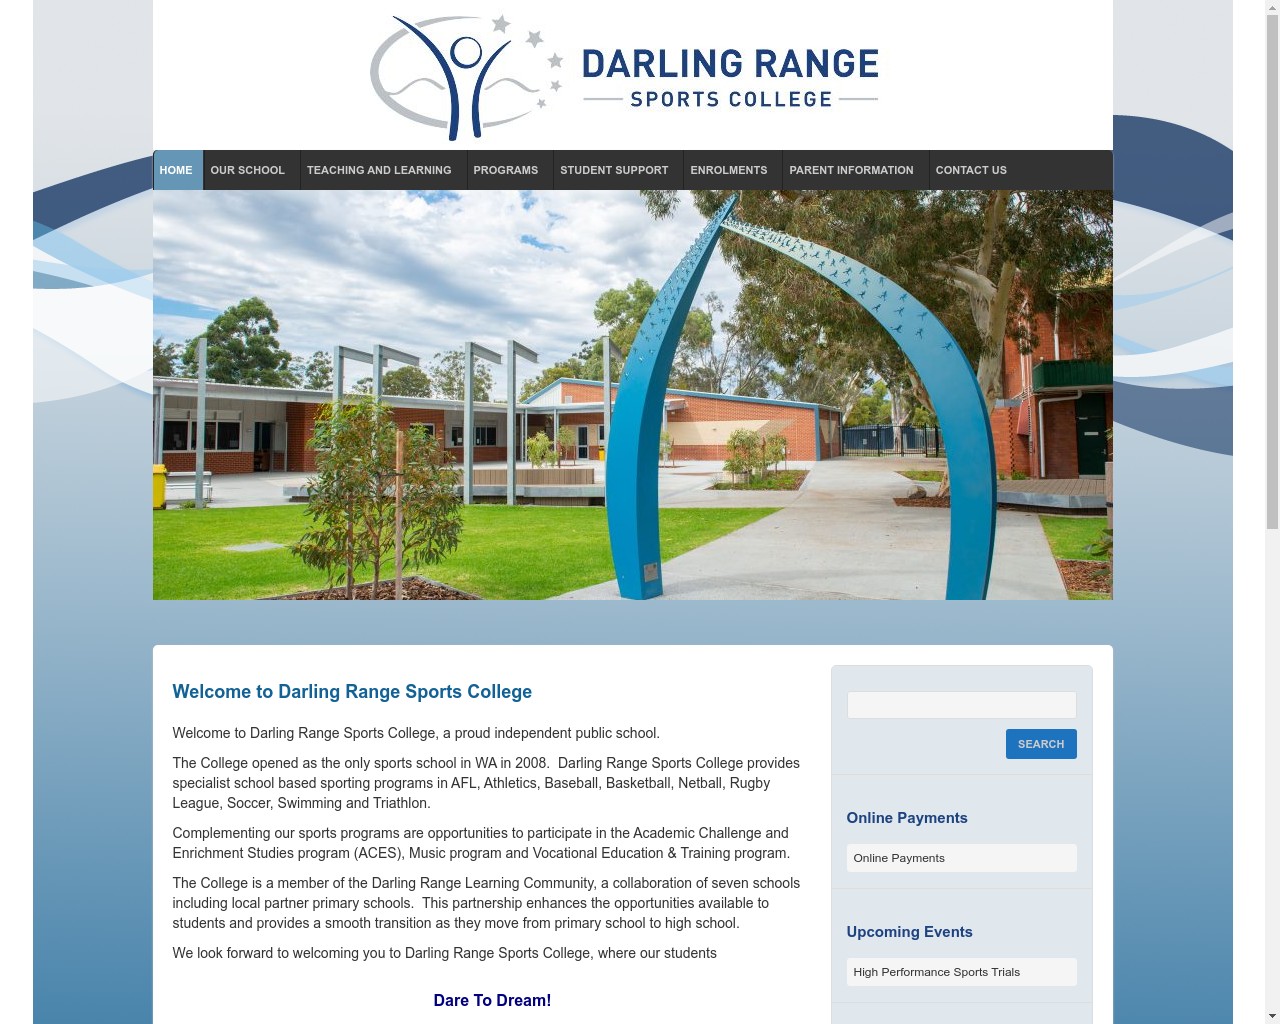 Darling Range Sports College